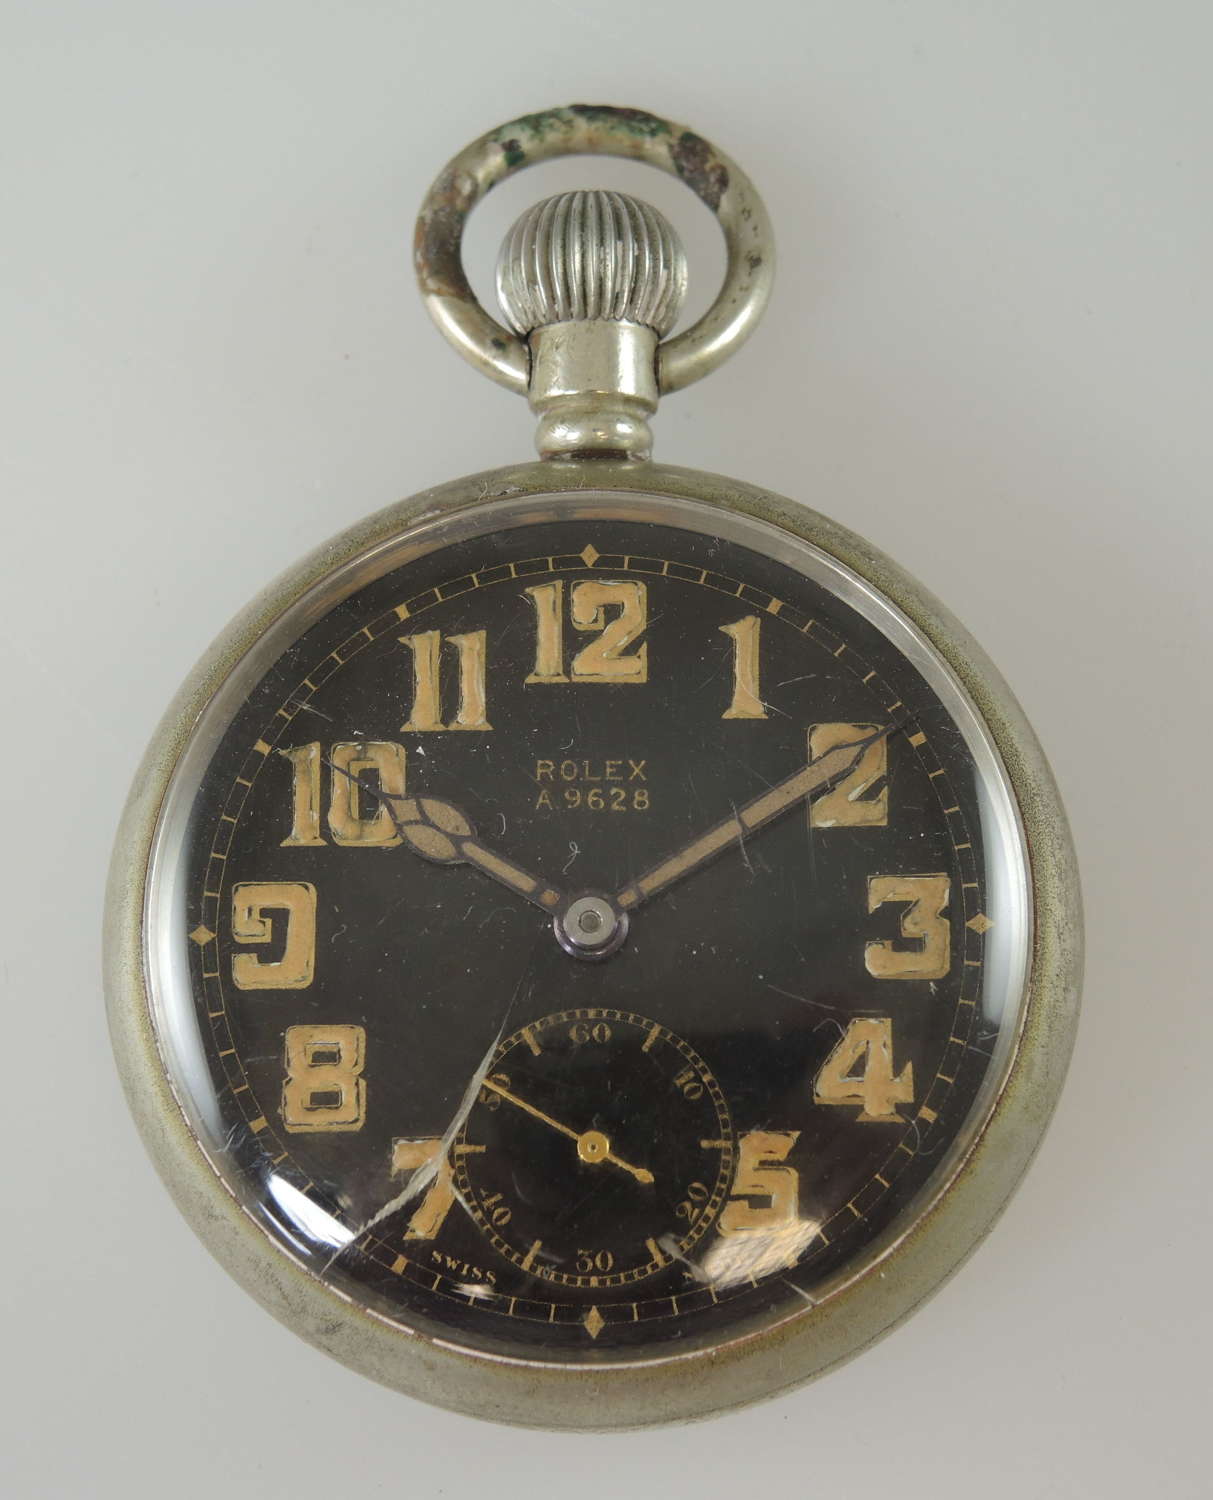 Military Rolex pocket watch c1940